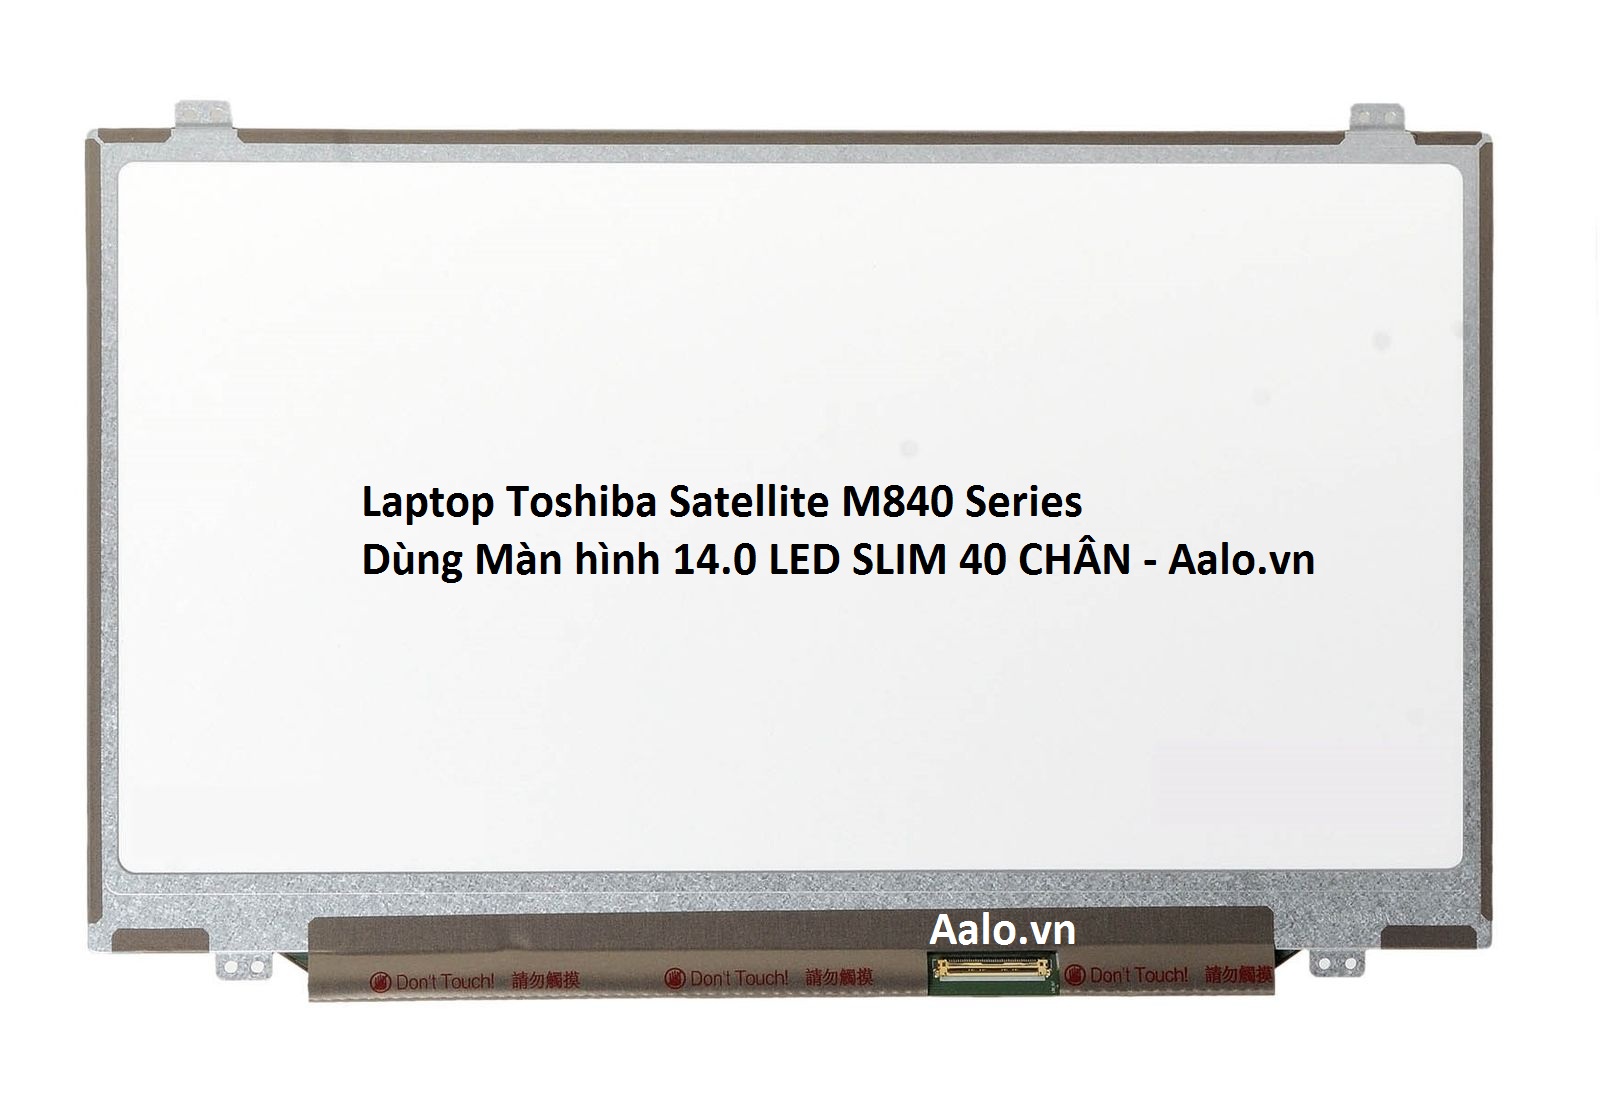 Màn hình Laptop Toshiba Satellite M840 Series - Aalo.vn